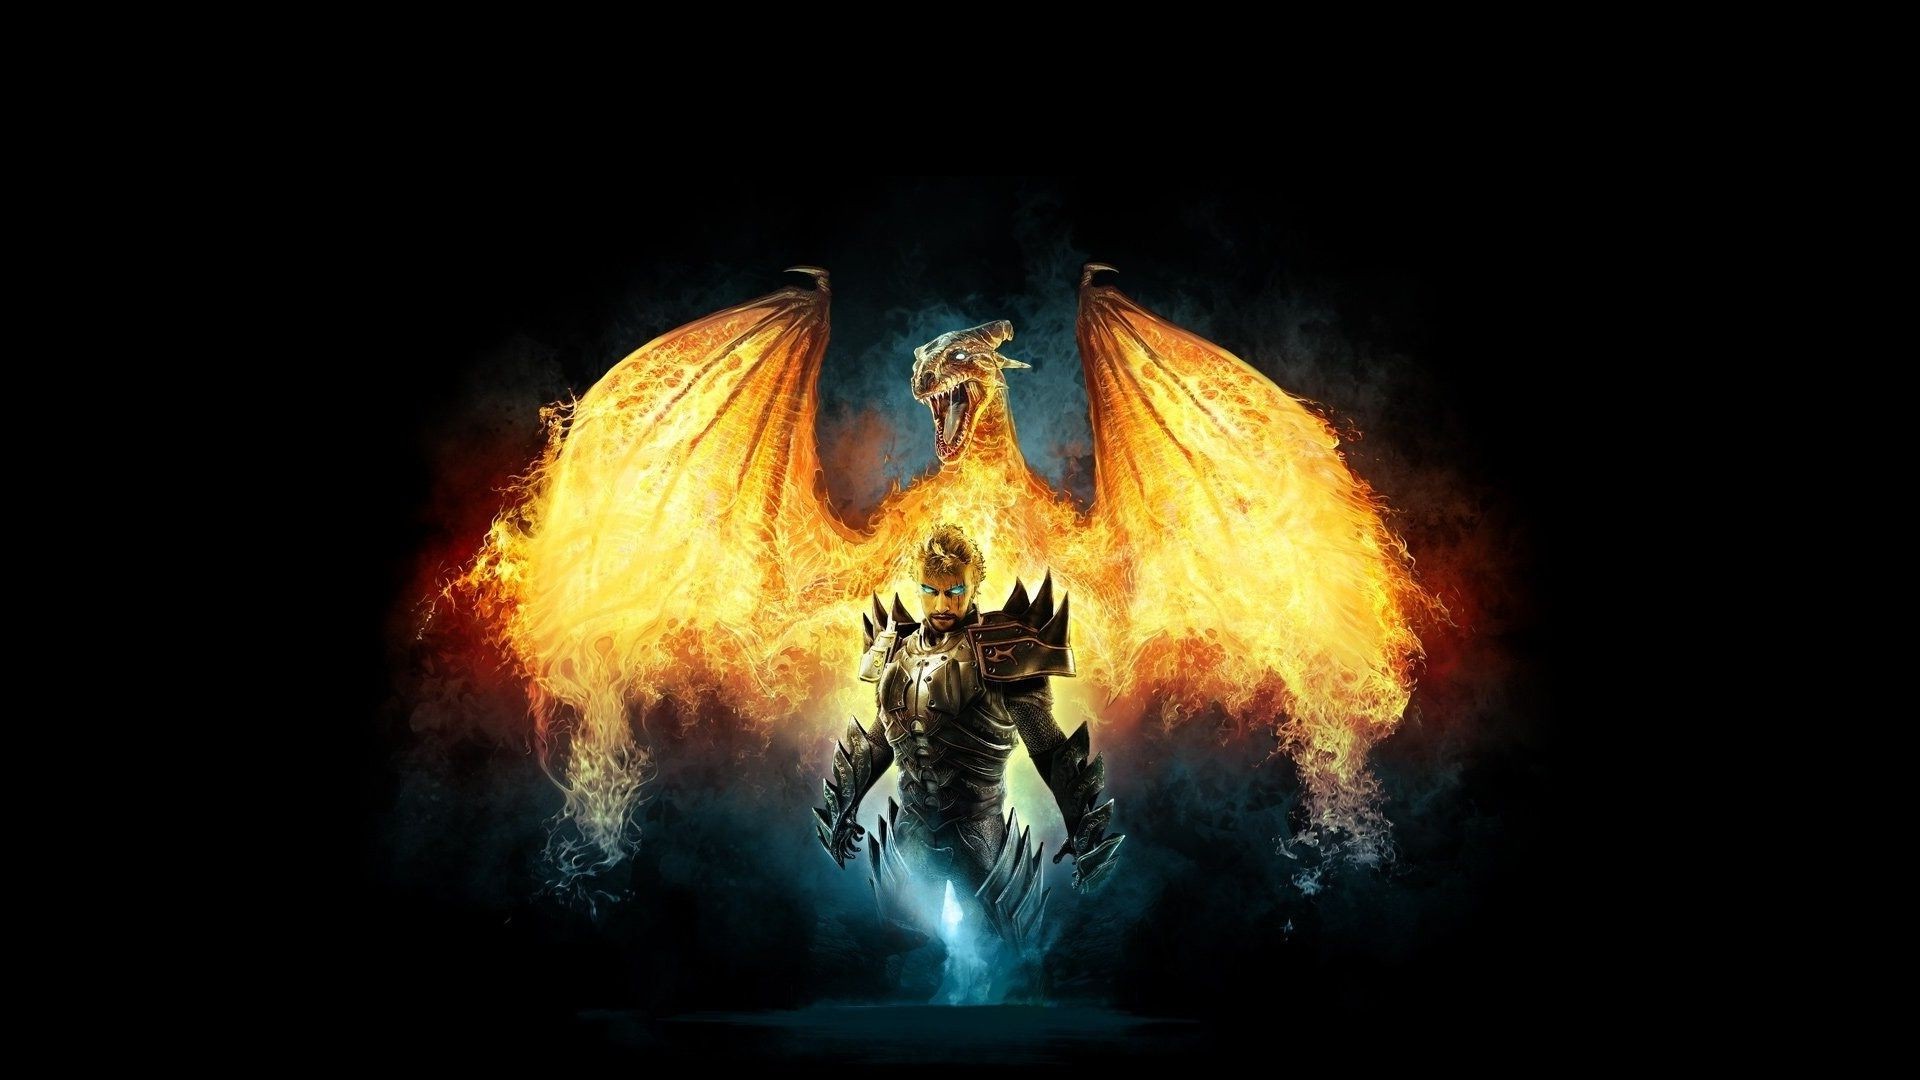 massive online games flame smoke explosion hot danger calamity burn astronomy magic energy